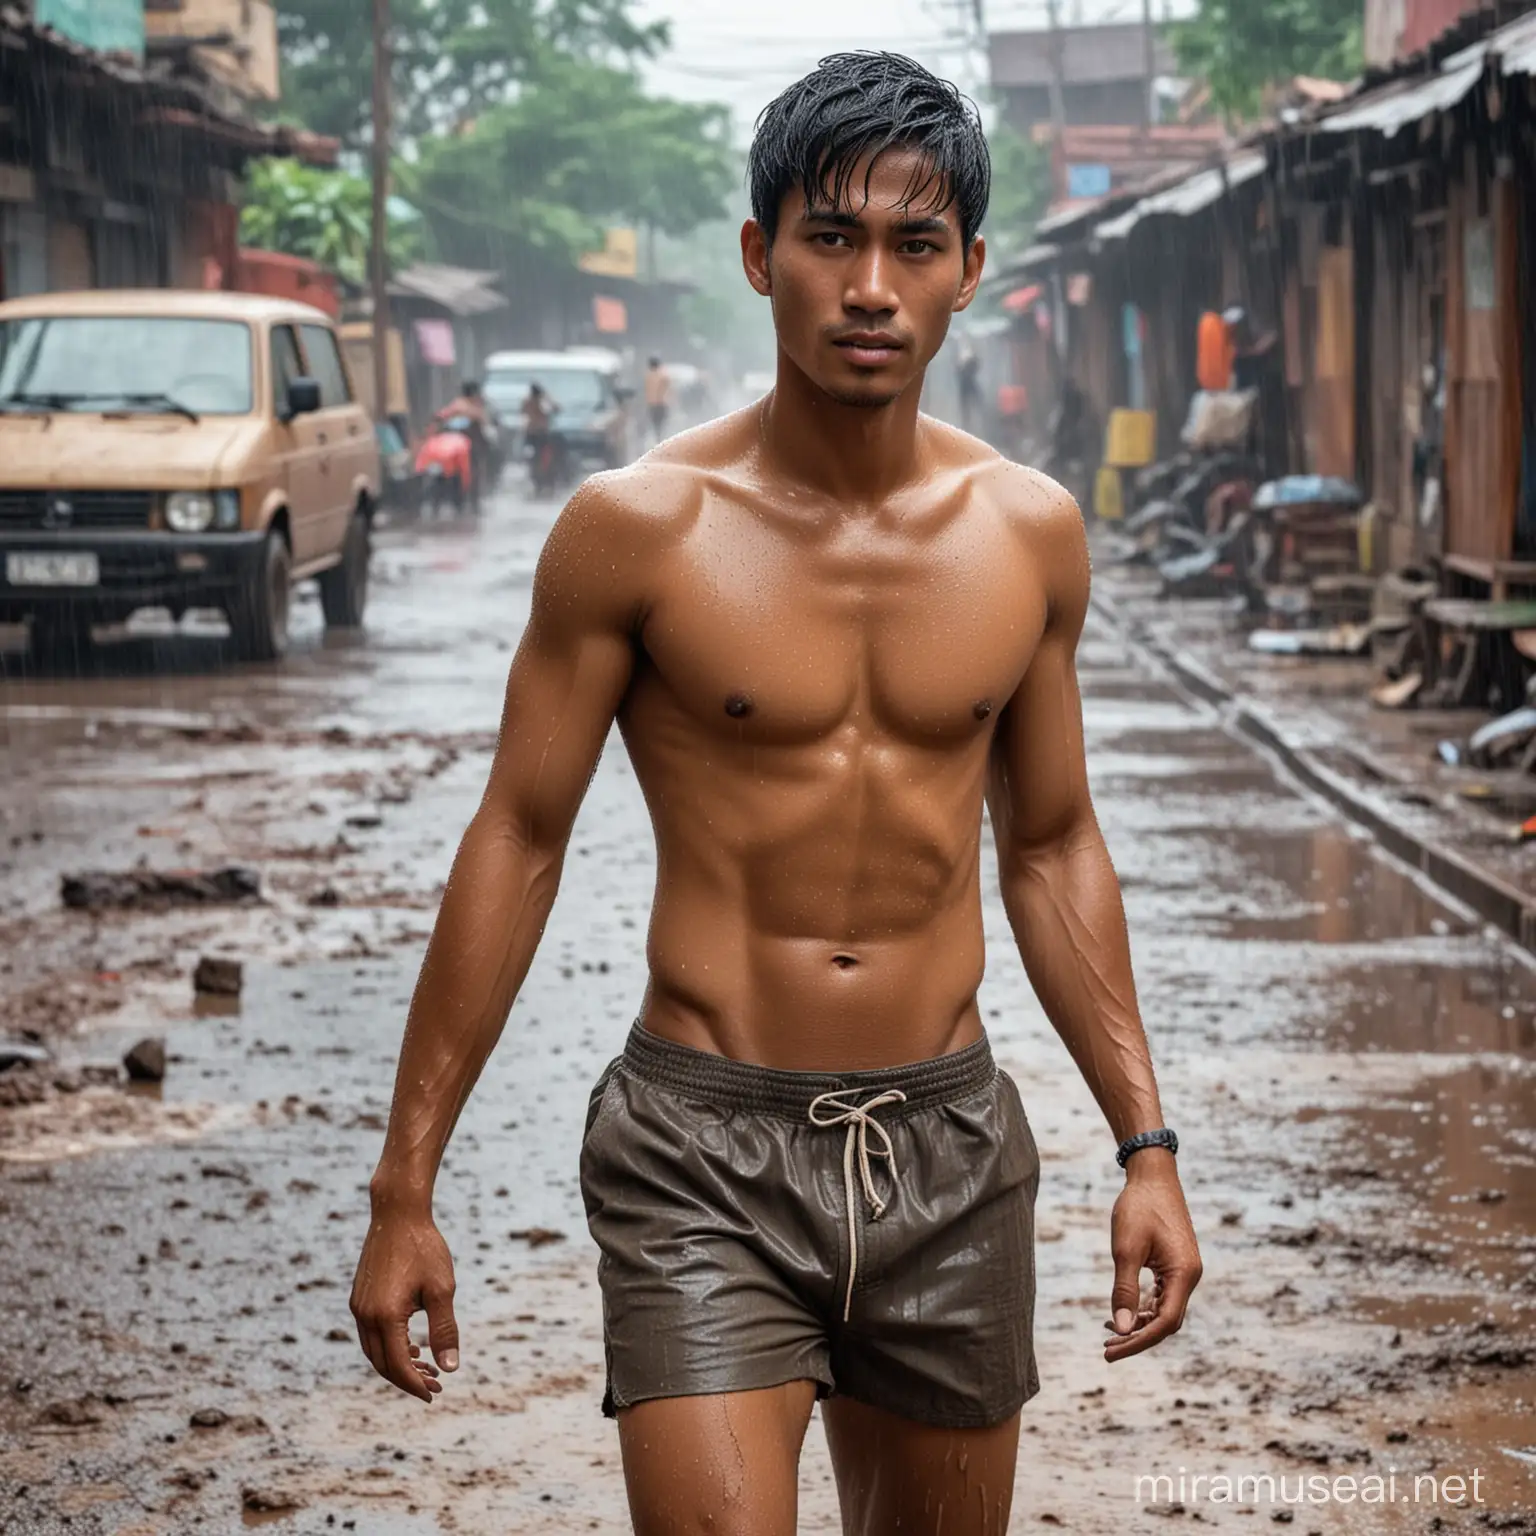 Tanned Indonesian Man Walking Shirtless in Heavy Rain